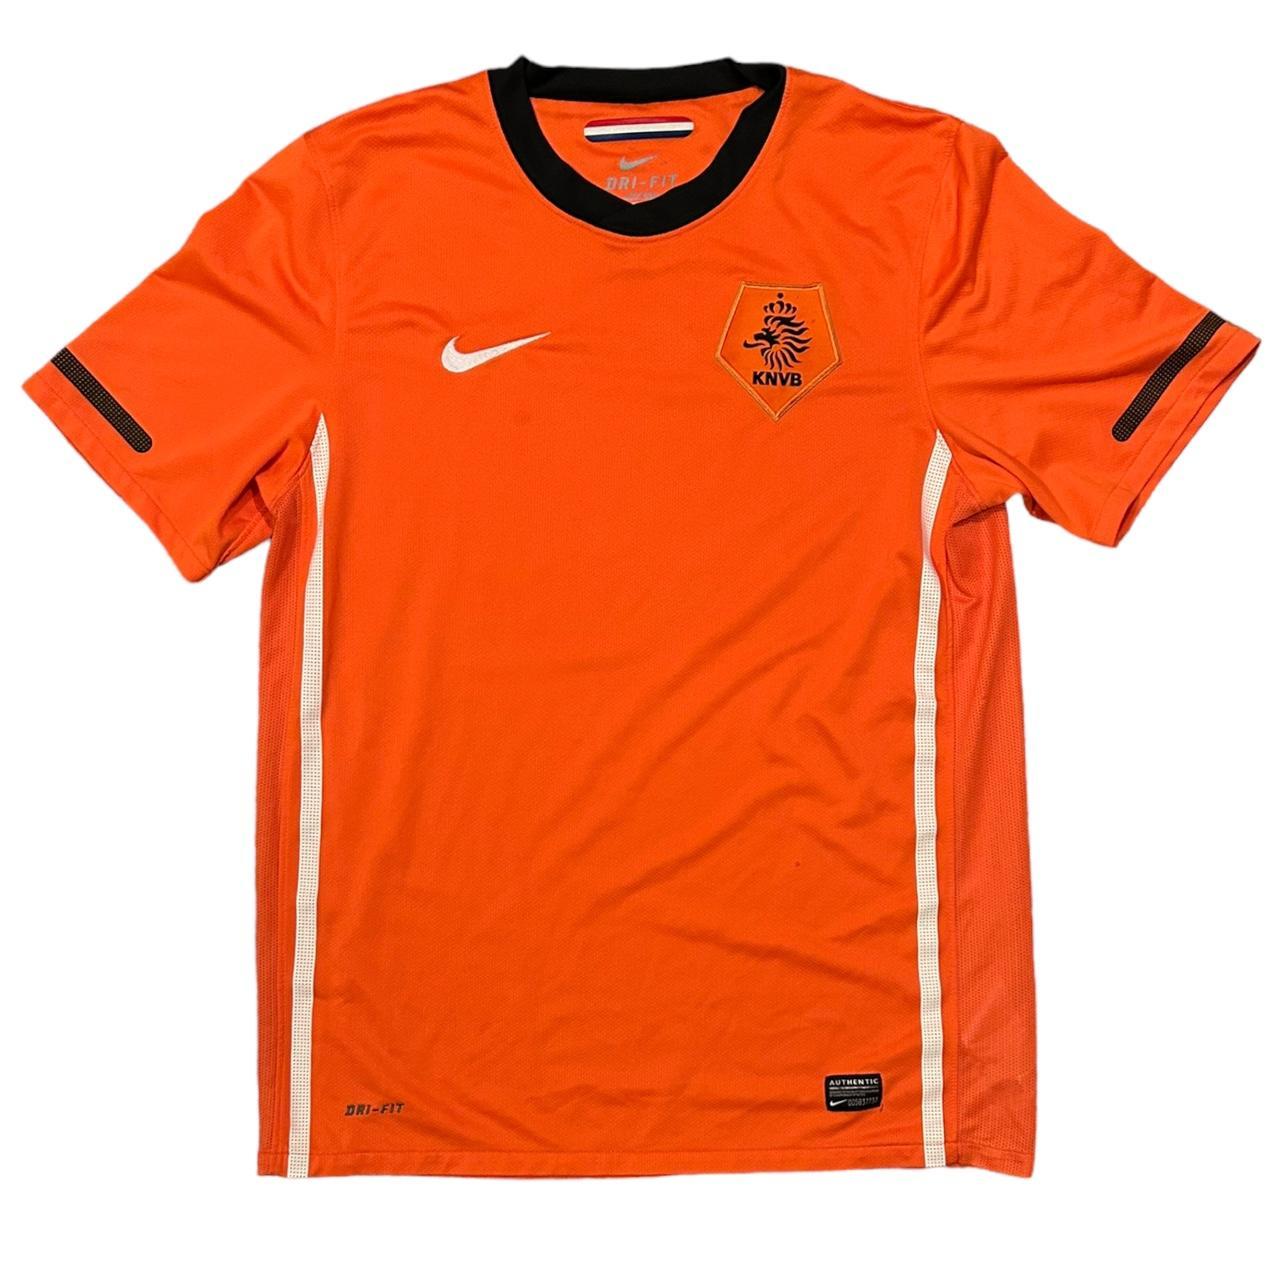 Nike Men's Orange and Black Shirt | Depop